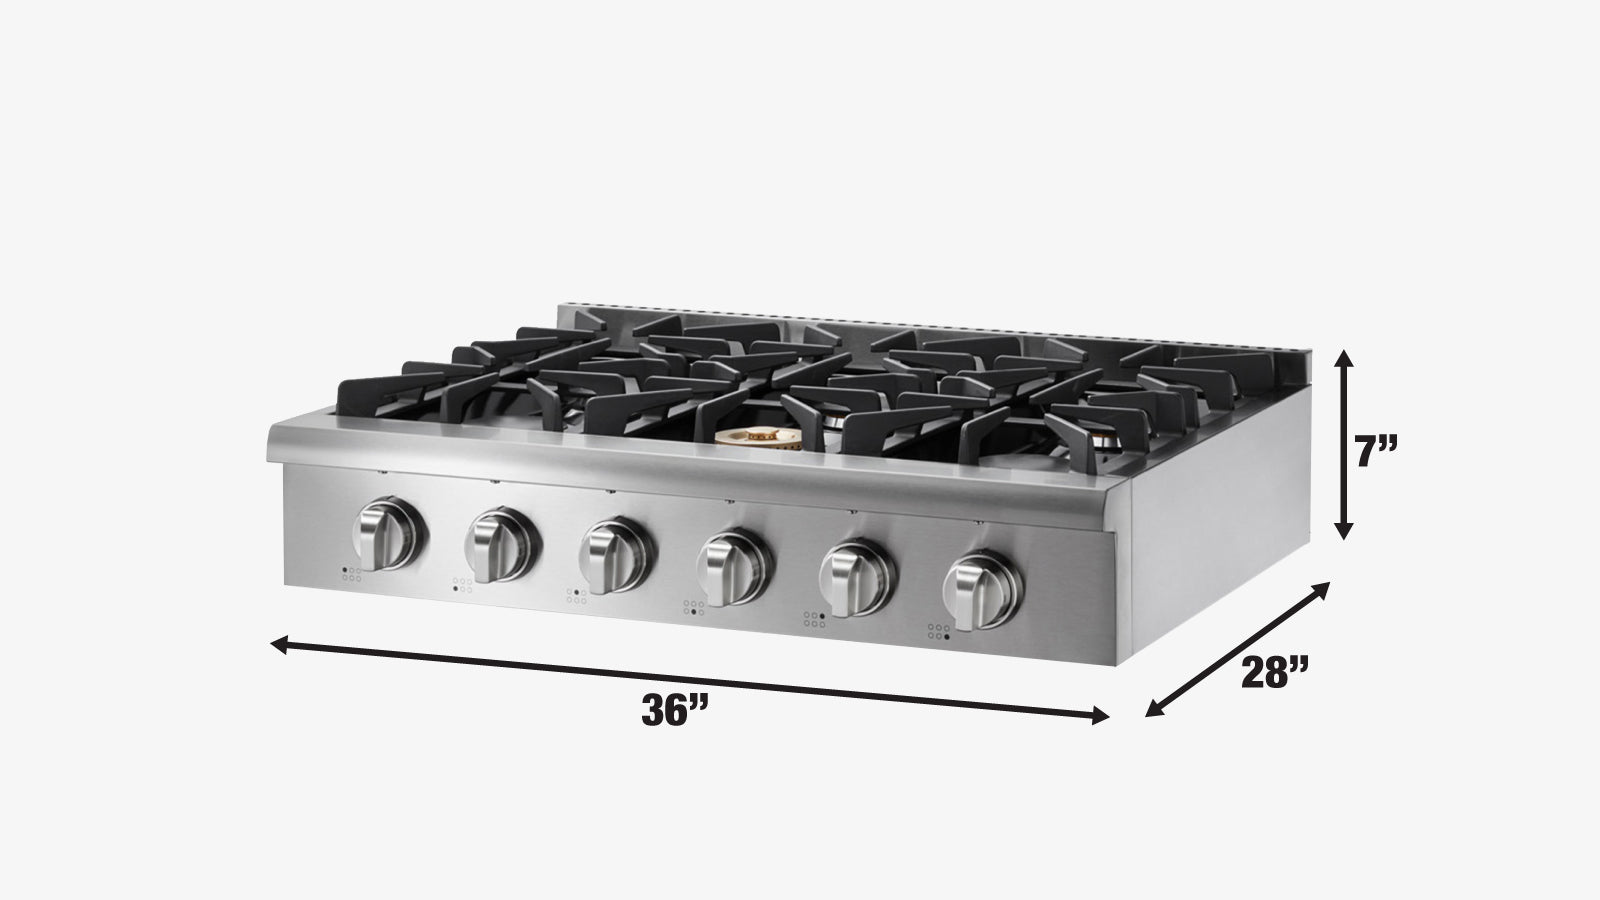 TMG Living Kitchen 36” Gas Range Cooktop, 6 Burners, 15000-18000 BTU w/680 BTU Simmer, LPG/NG Fuel, Blue LED Lights, TMG-HRG36T-specifications-image